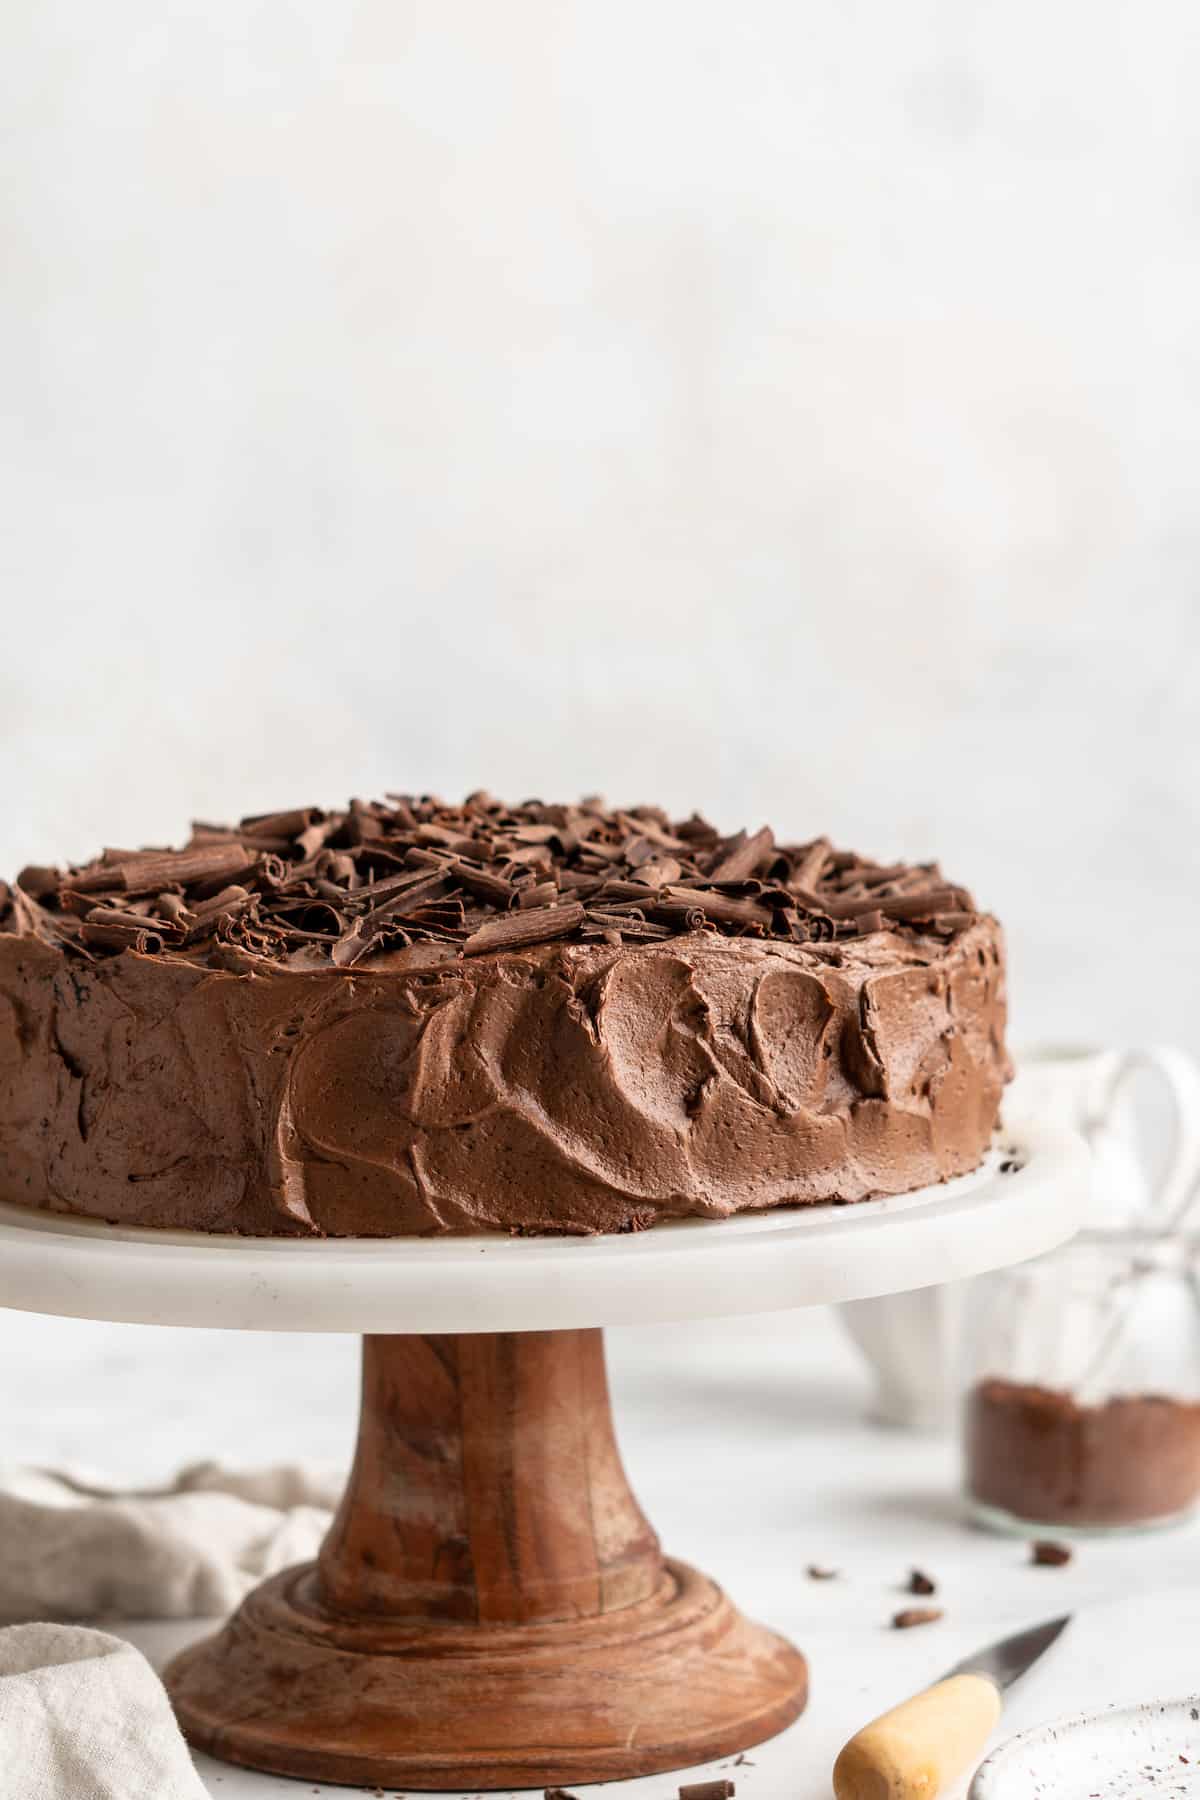 Whole vegan chocolate cake on cake stand